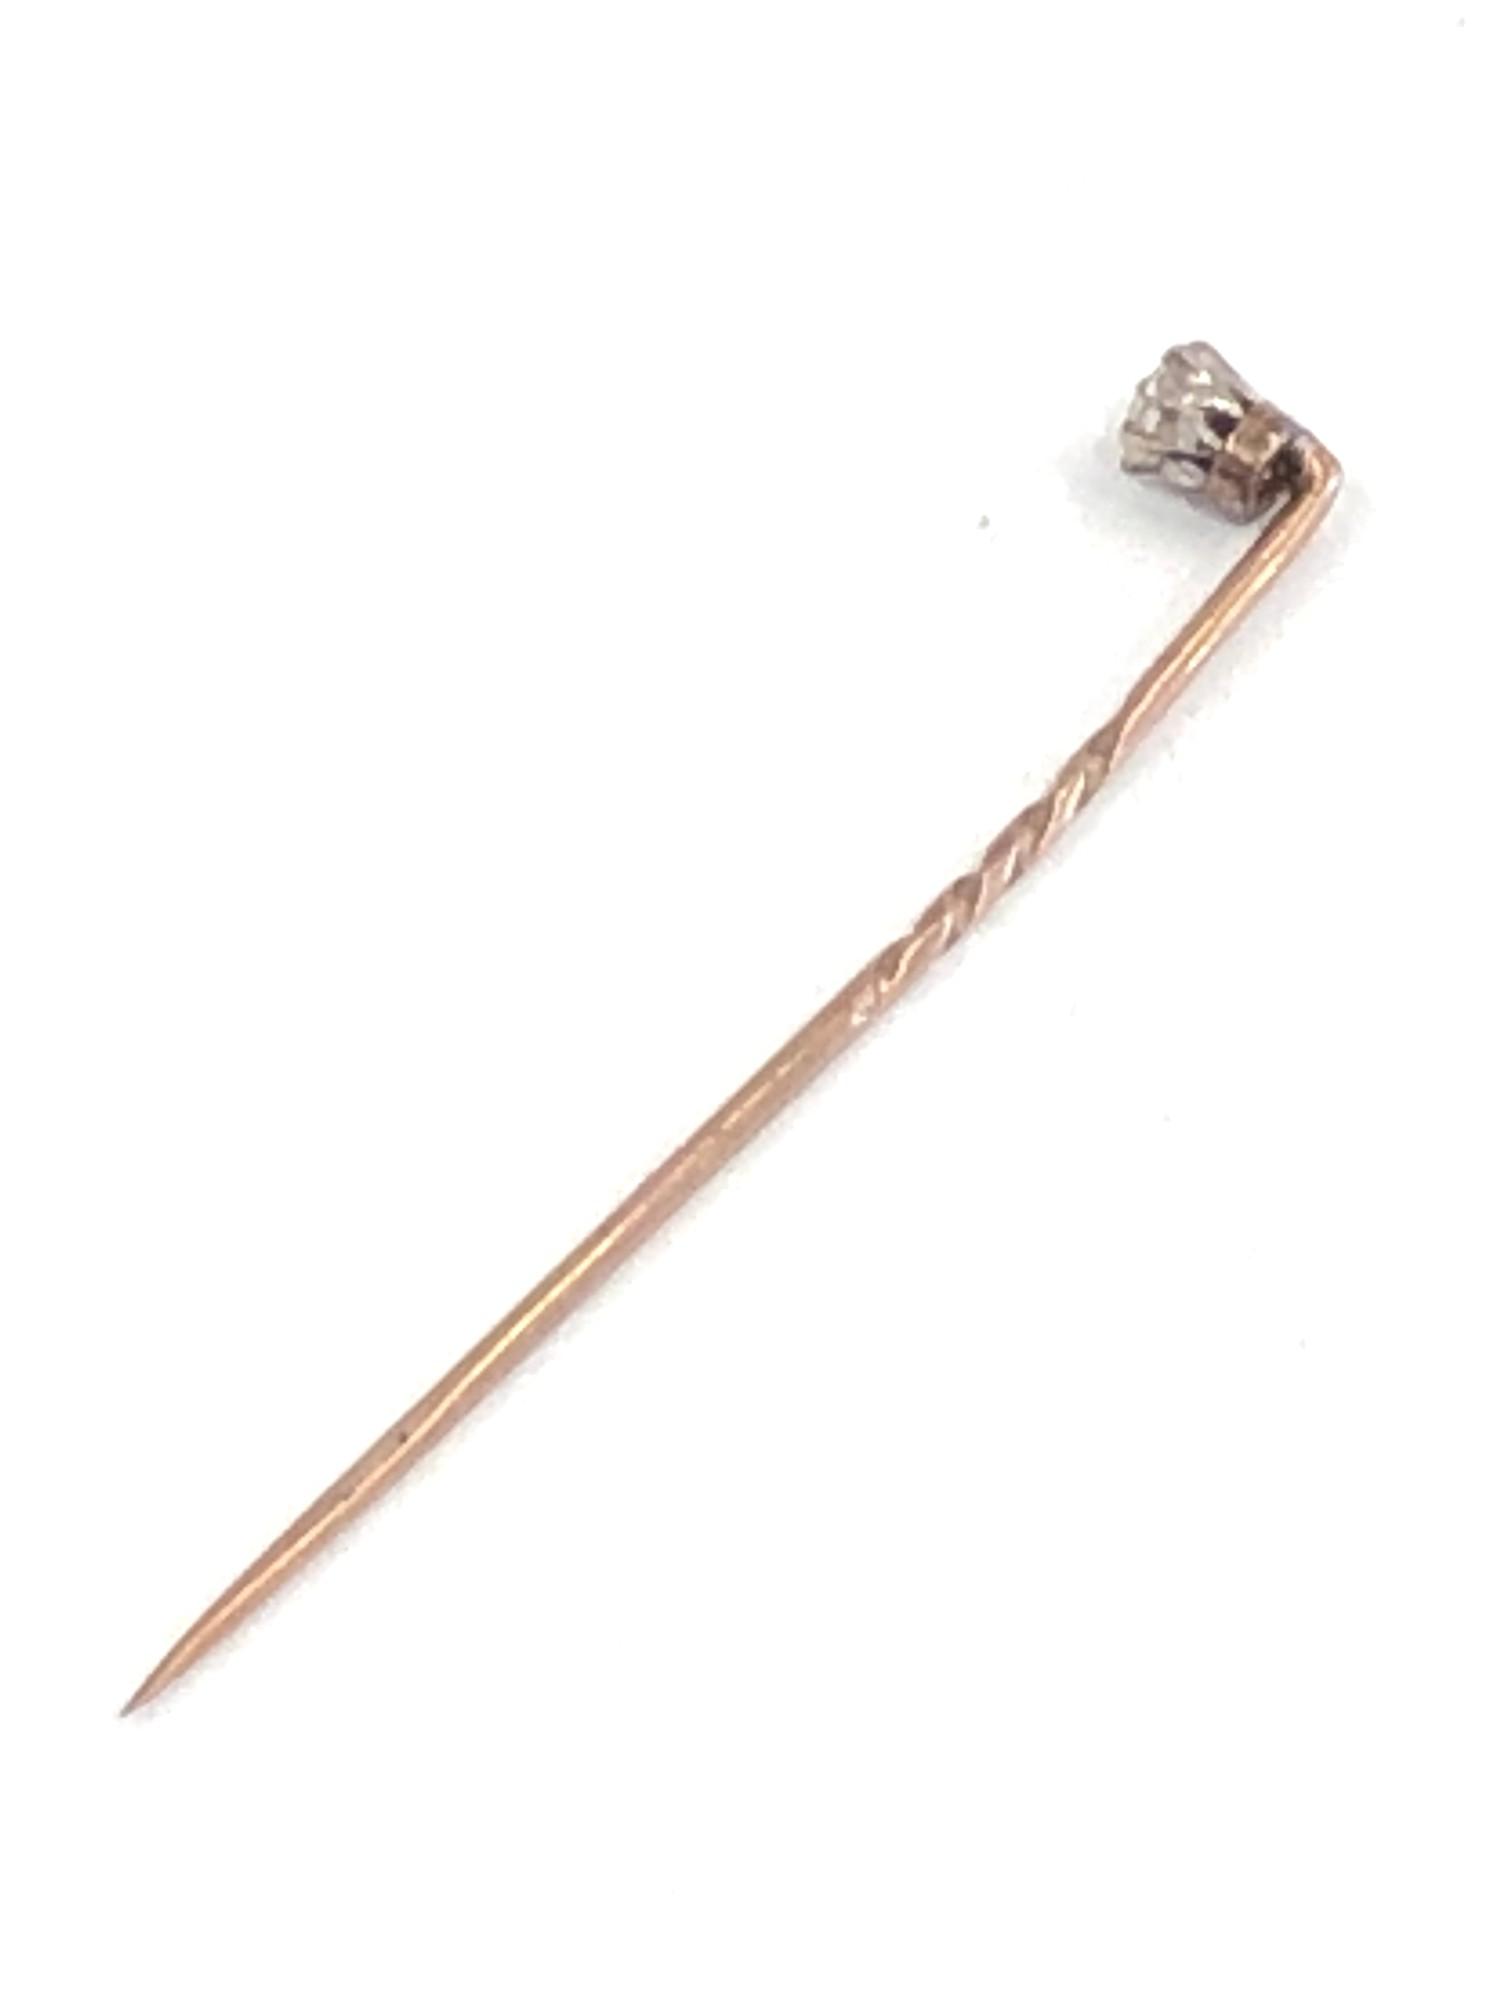 Antique Diamond stick pin diamond measures approx 4mm dia